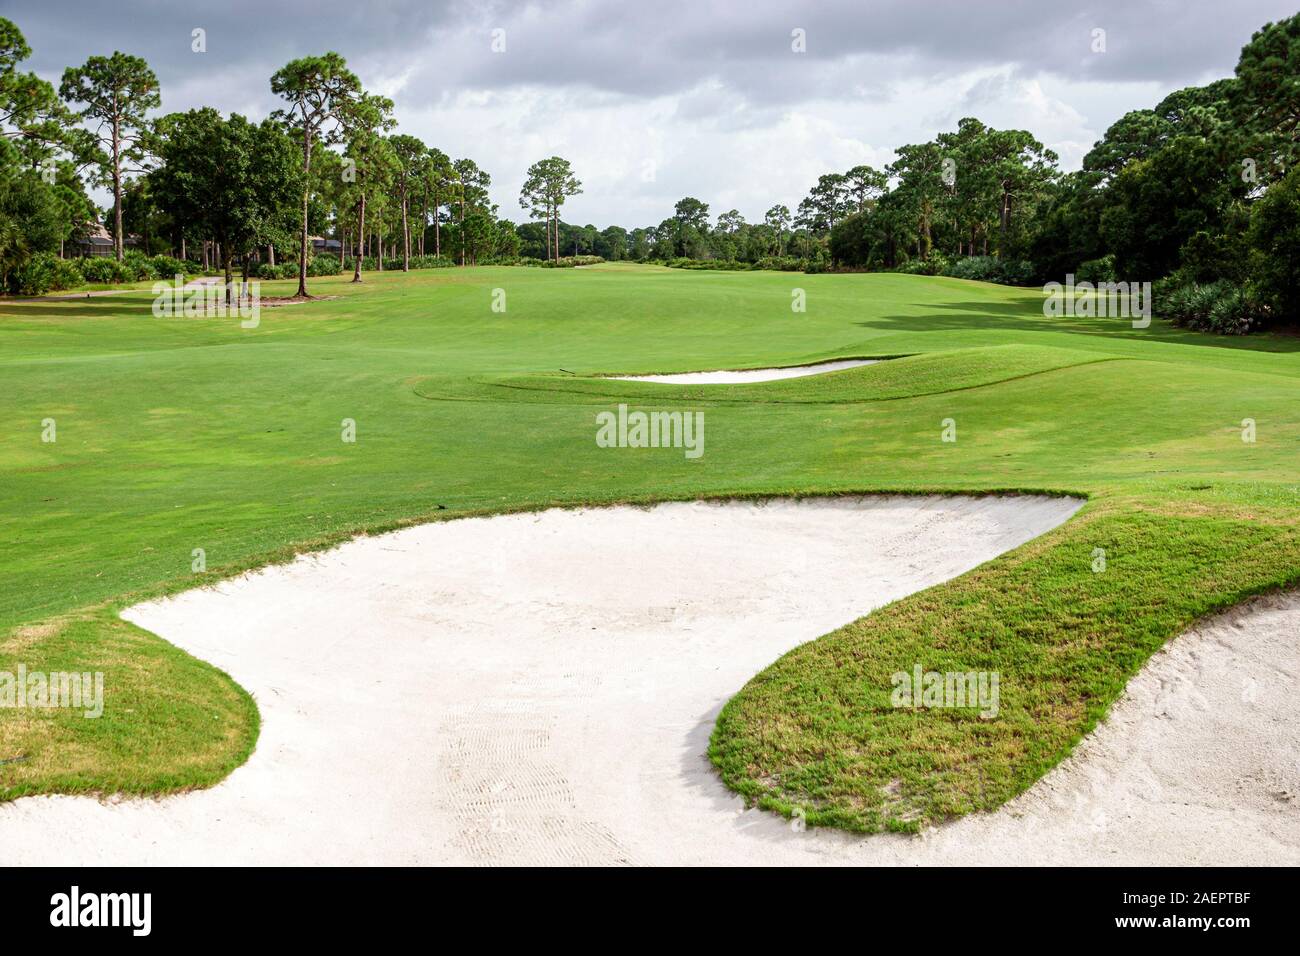 Port St Saint Lucie Florida,PGA Golf Club at PGA Village,course fairway,sand trap,bunker,pine trees,FL190920007 Stock Photo